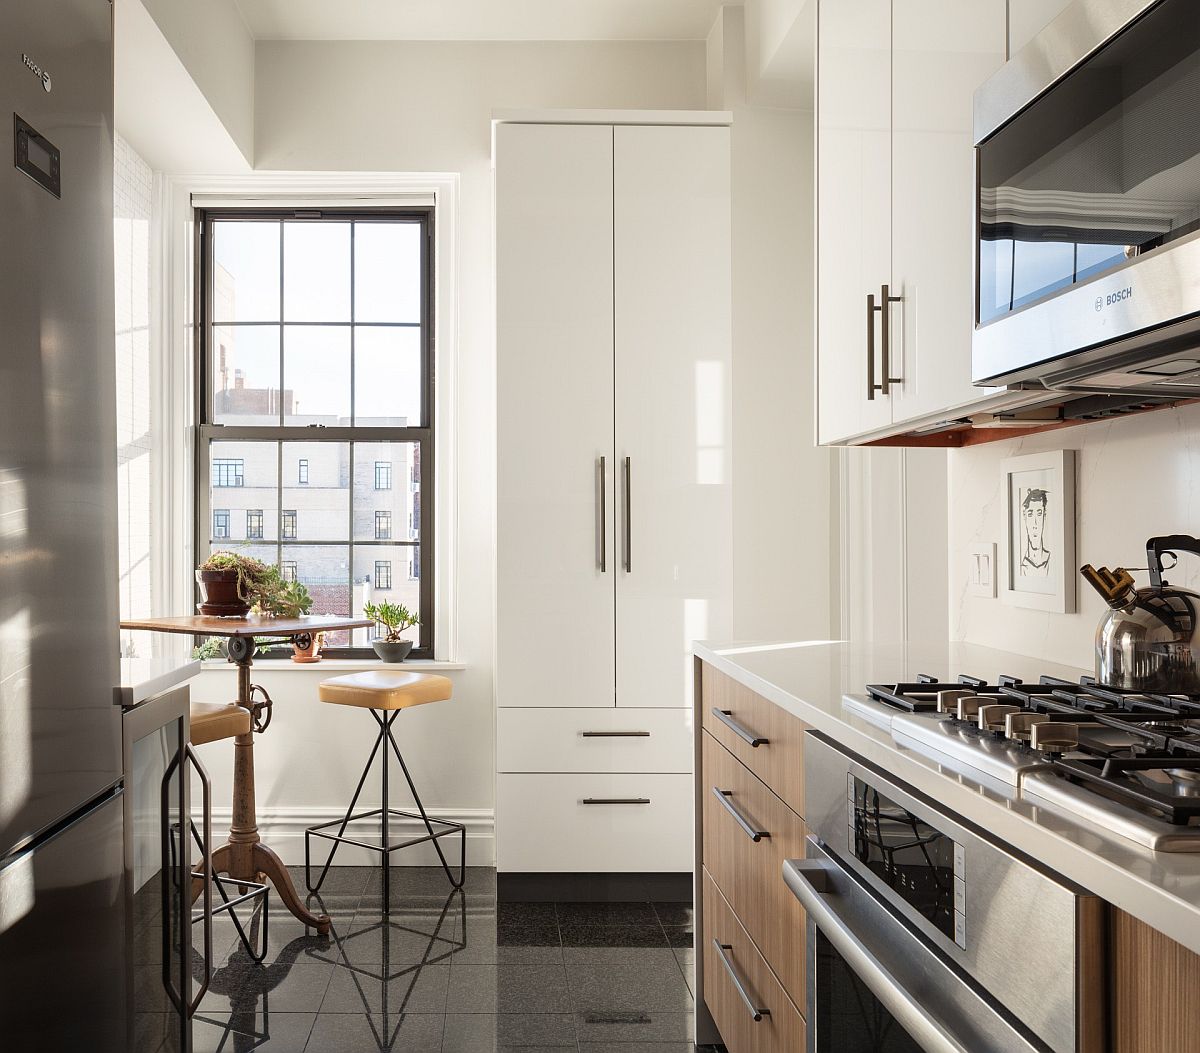 york small city kitchens kitchen creativity inspire interior